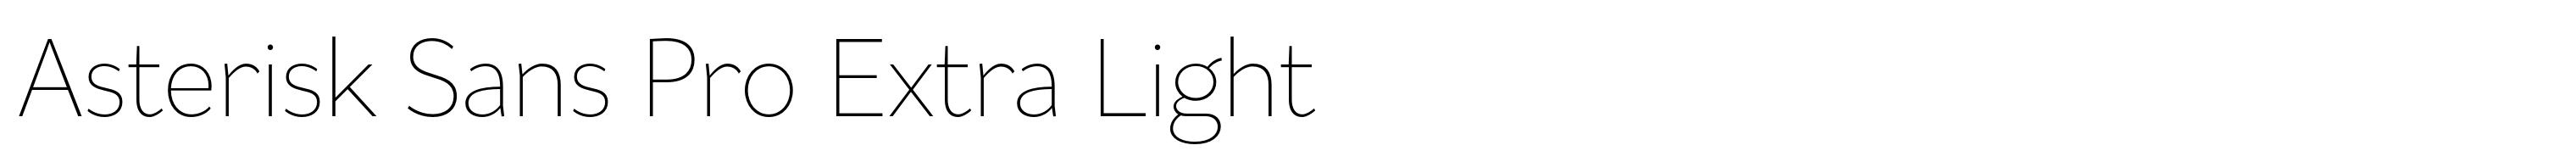 Asterisk Sans Pro Extra Light